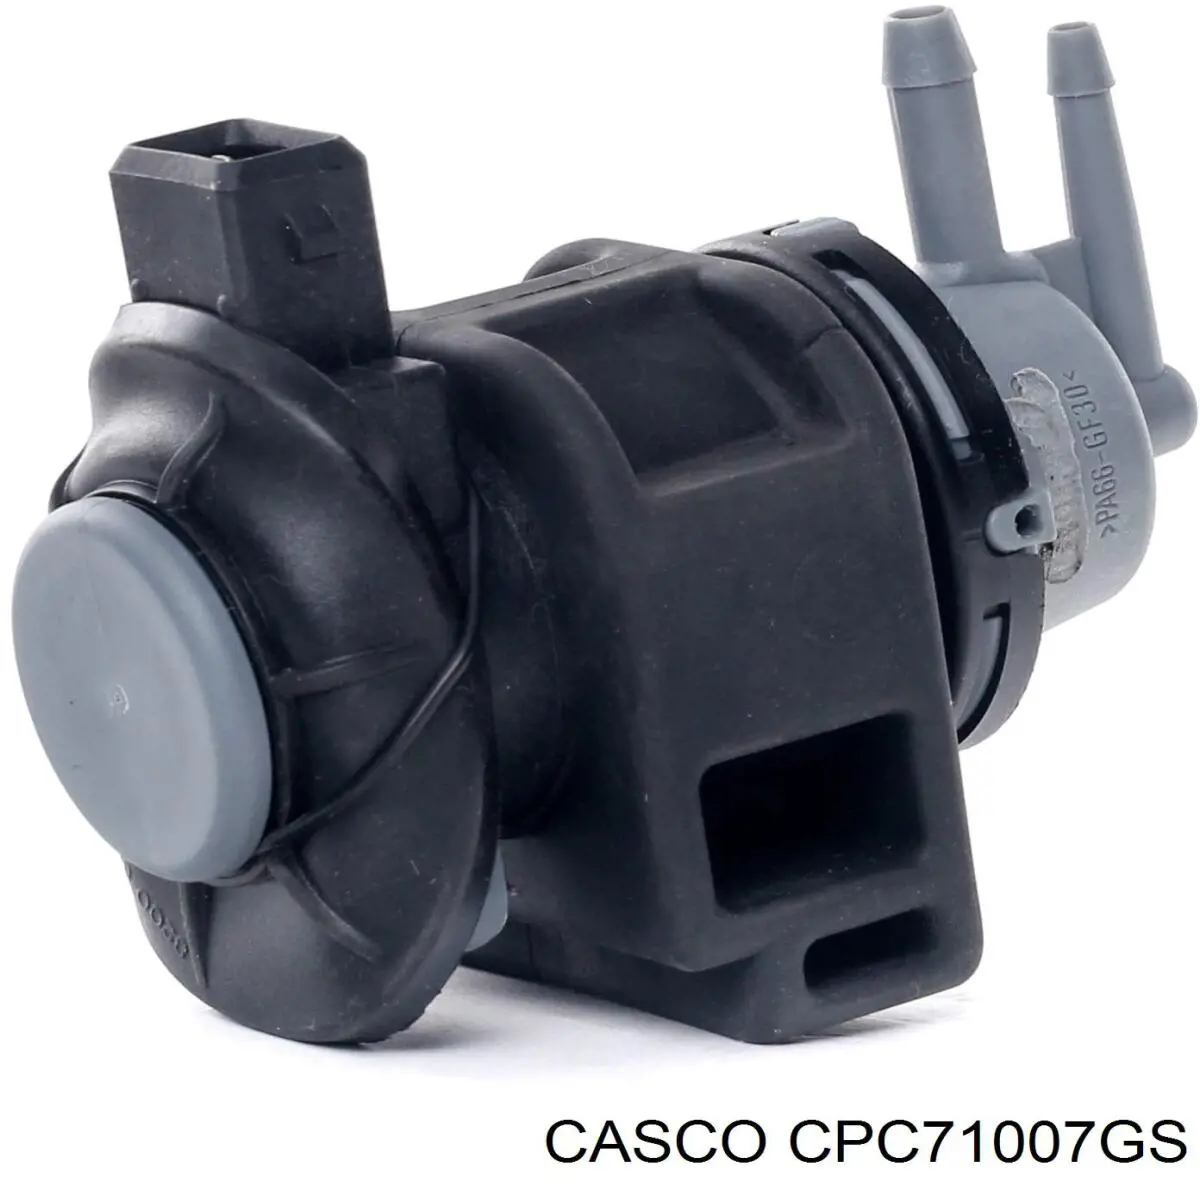 CPC71007GS Casco клапан преобразователь давления наддува (соленоид)